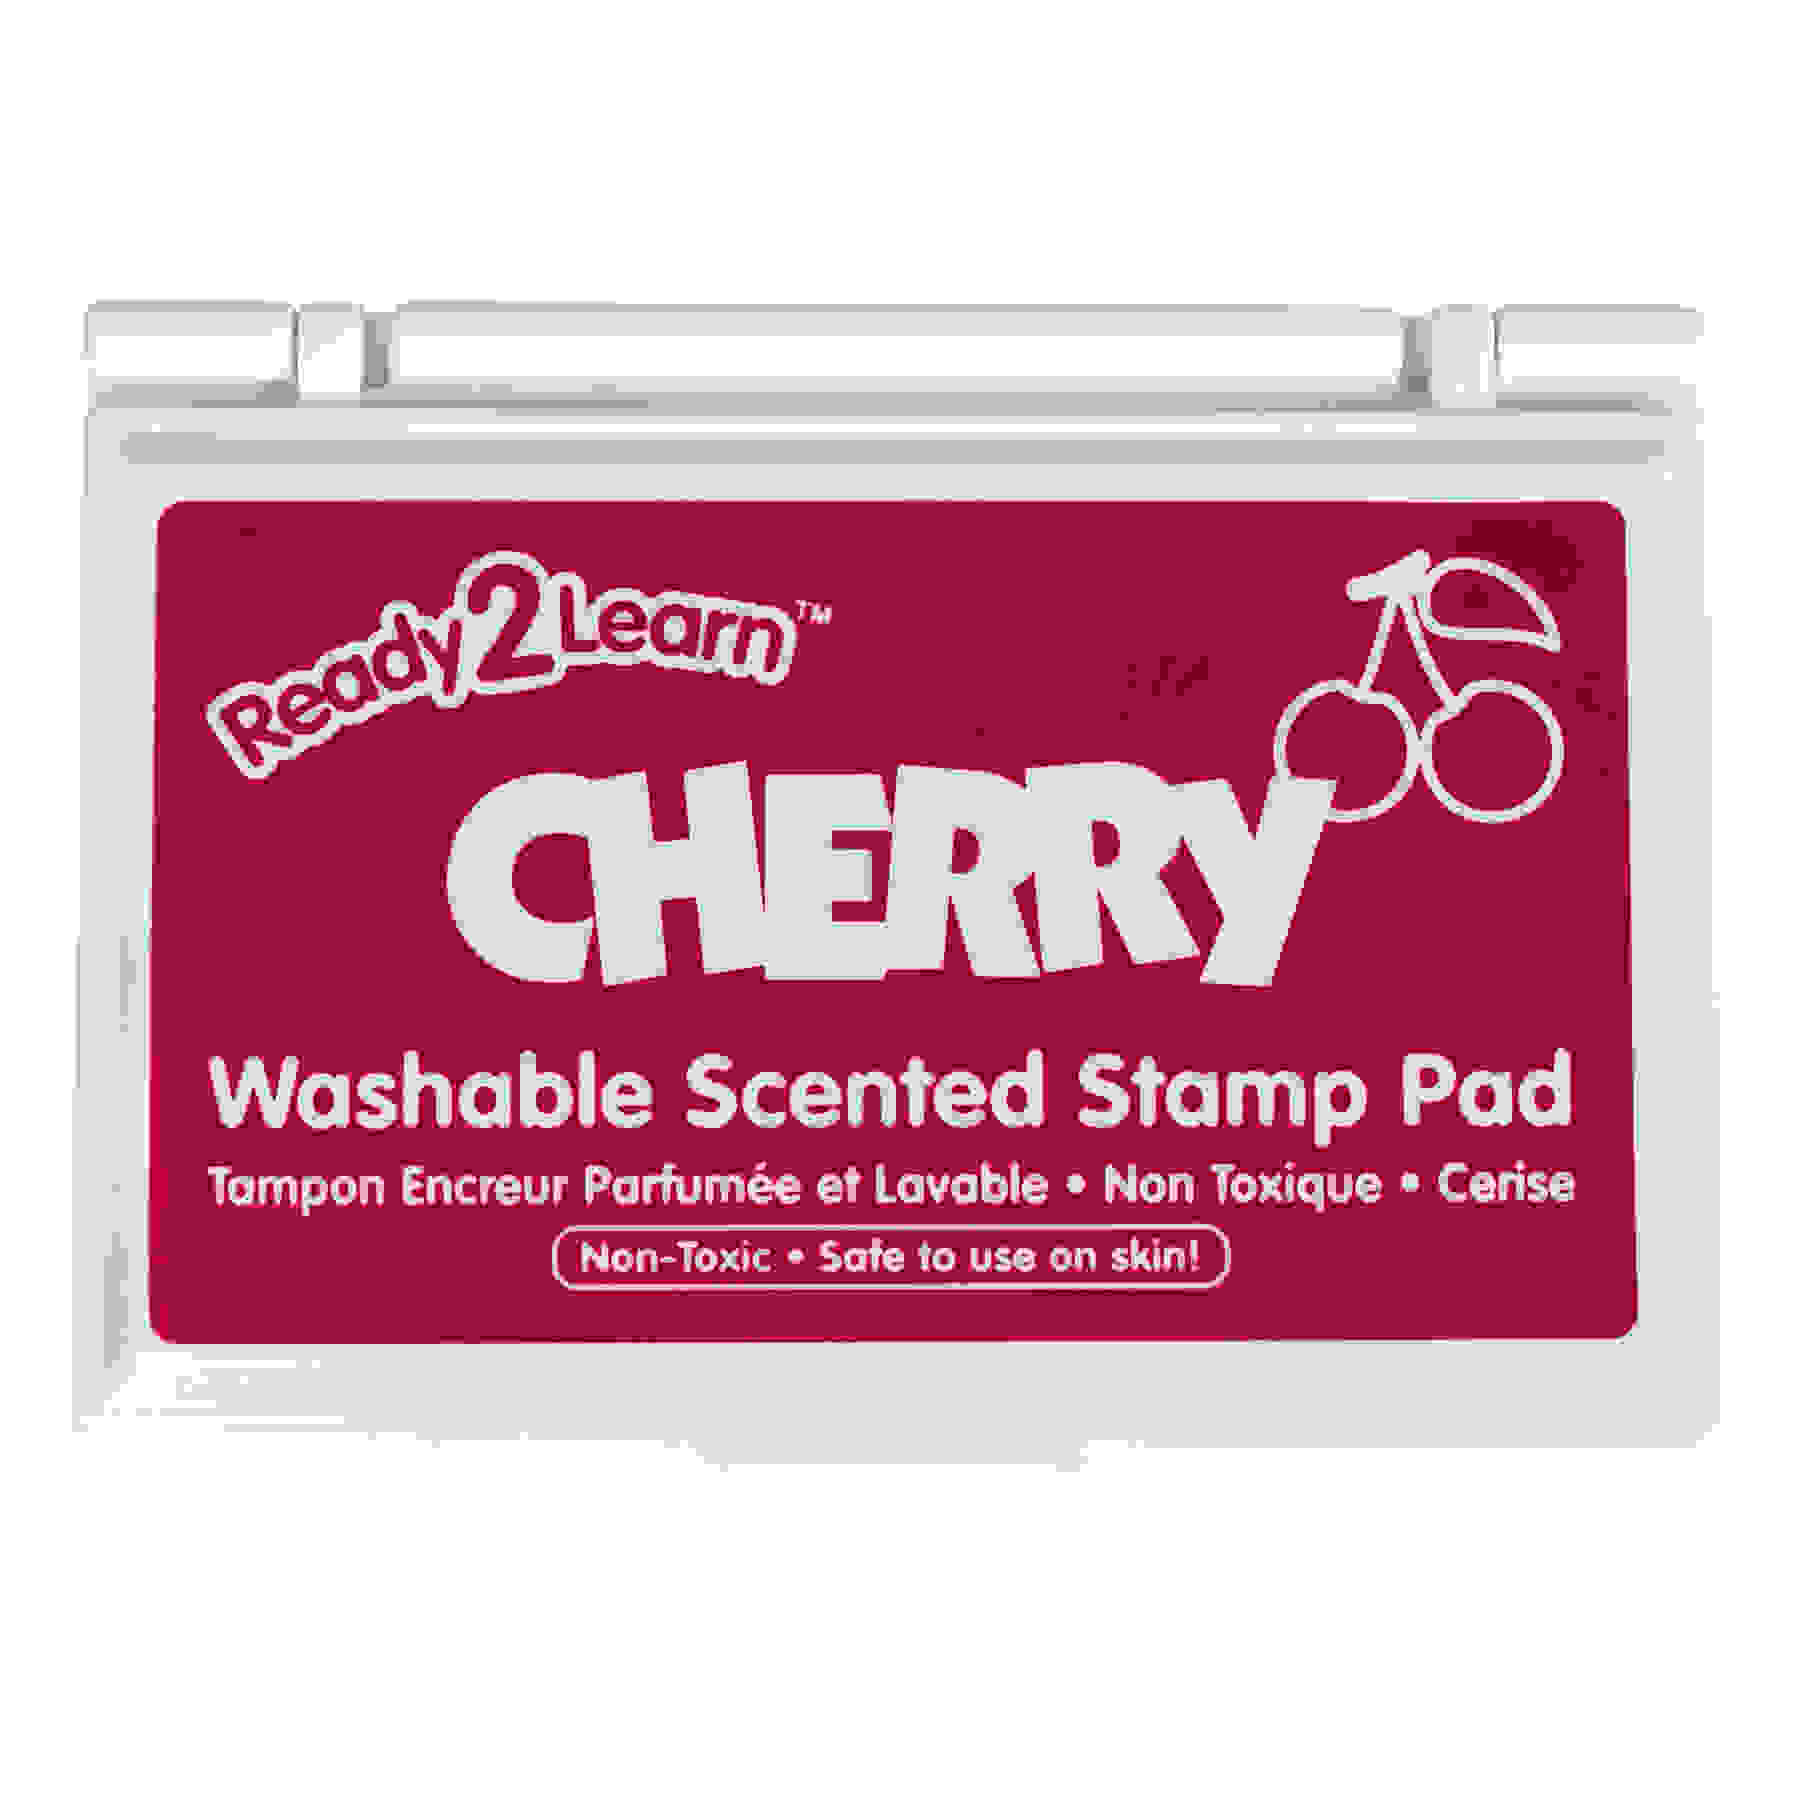 Washable Stamp Pad, Cherry Scent, Dark Red